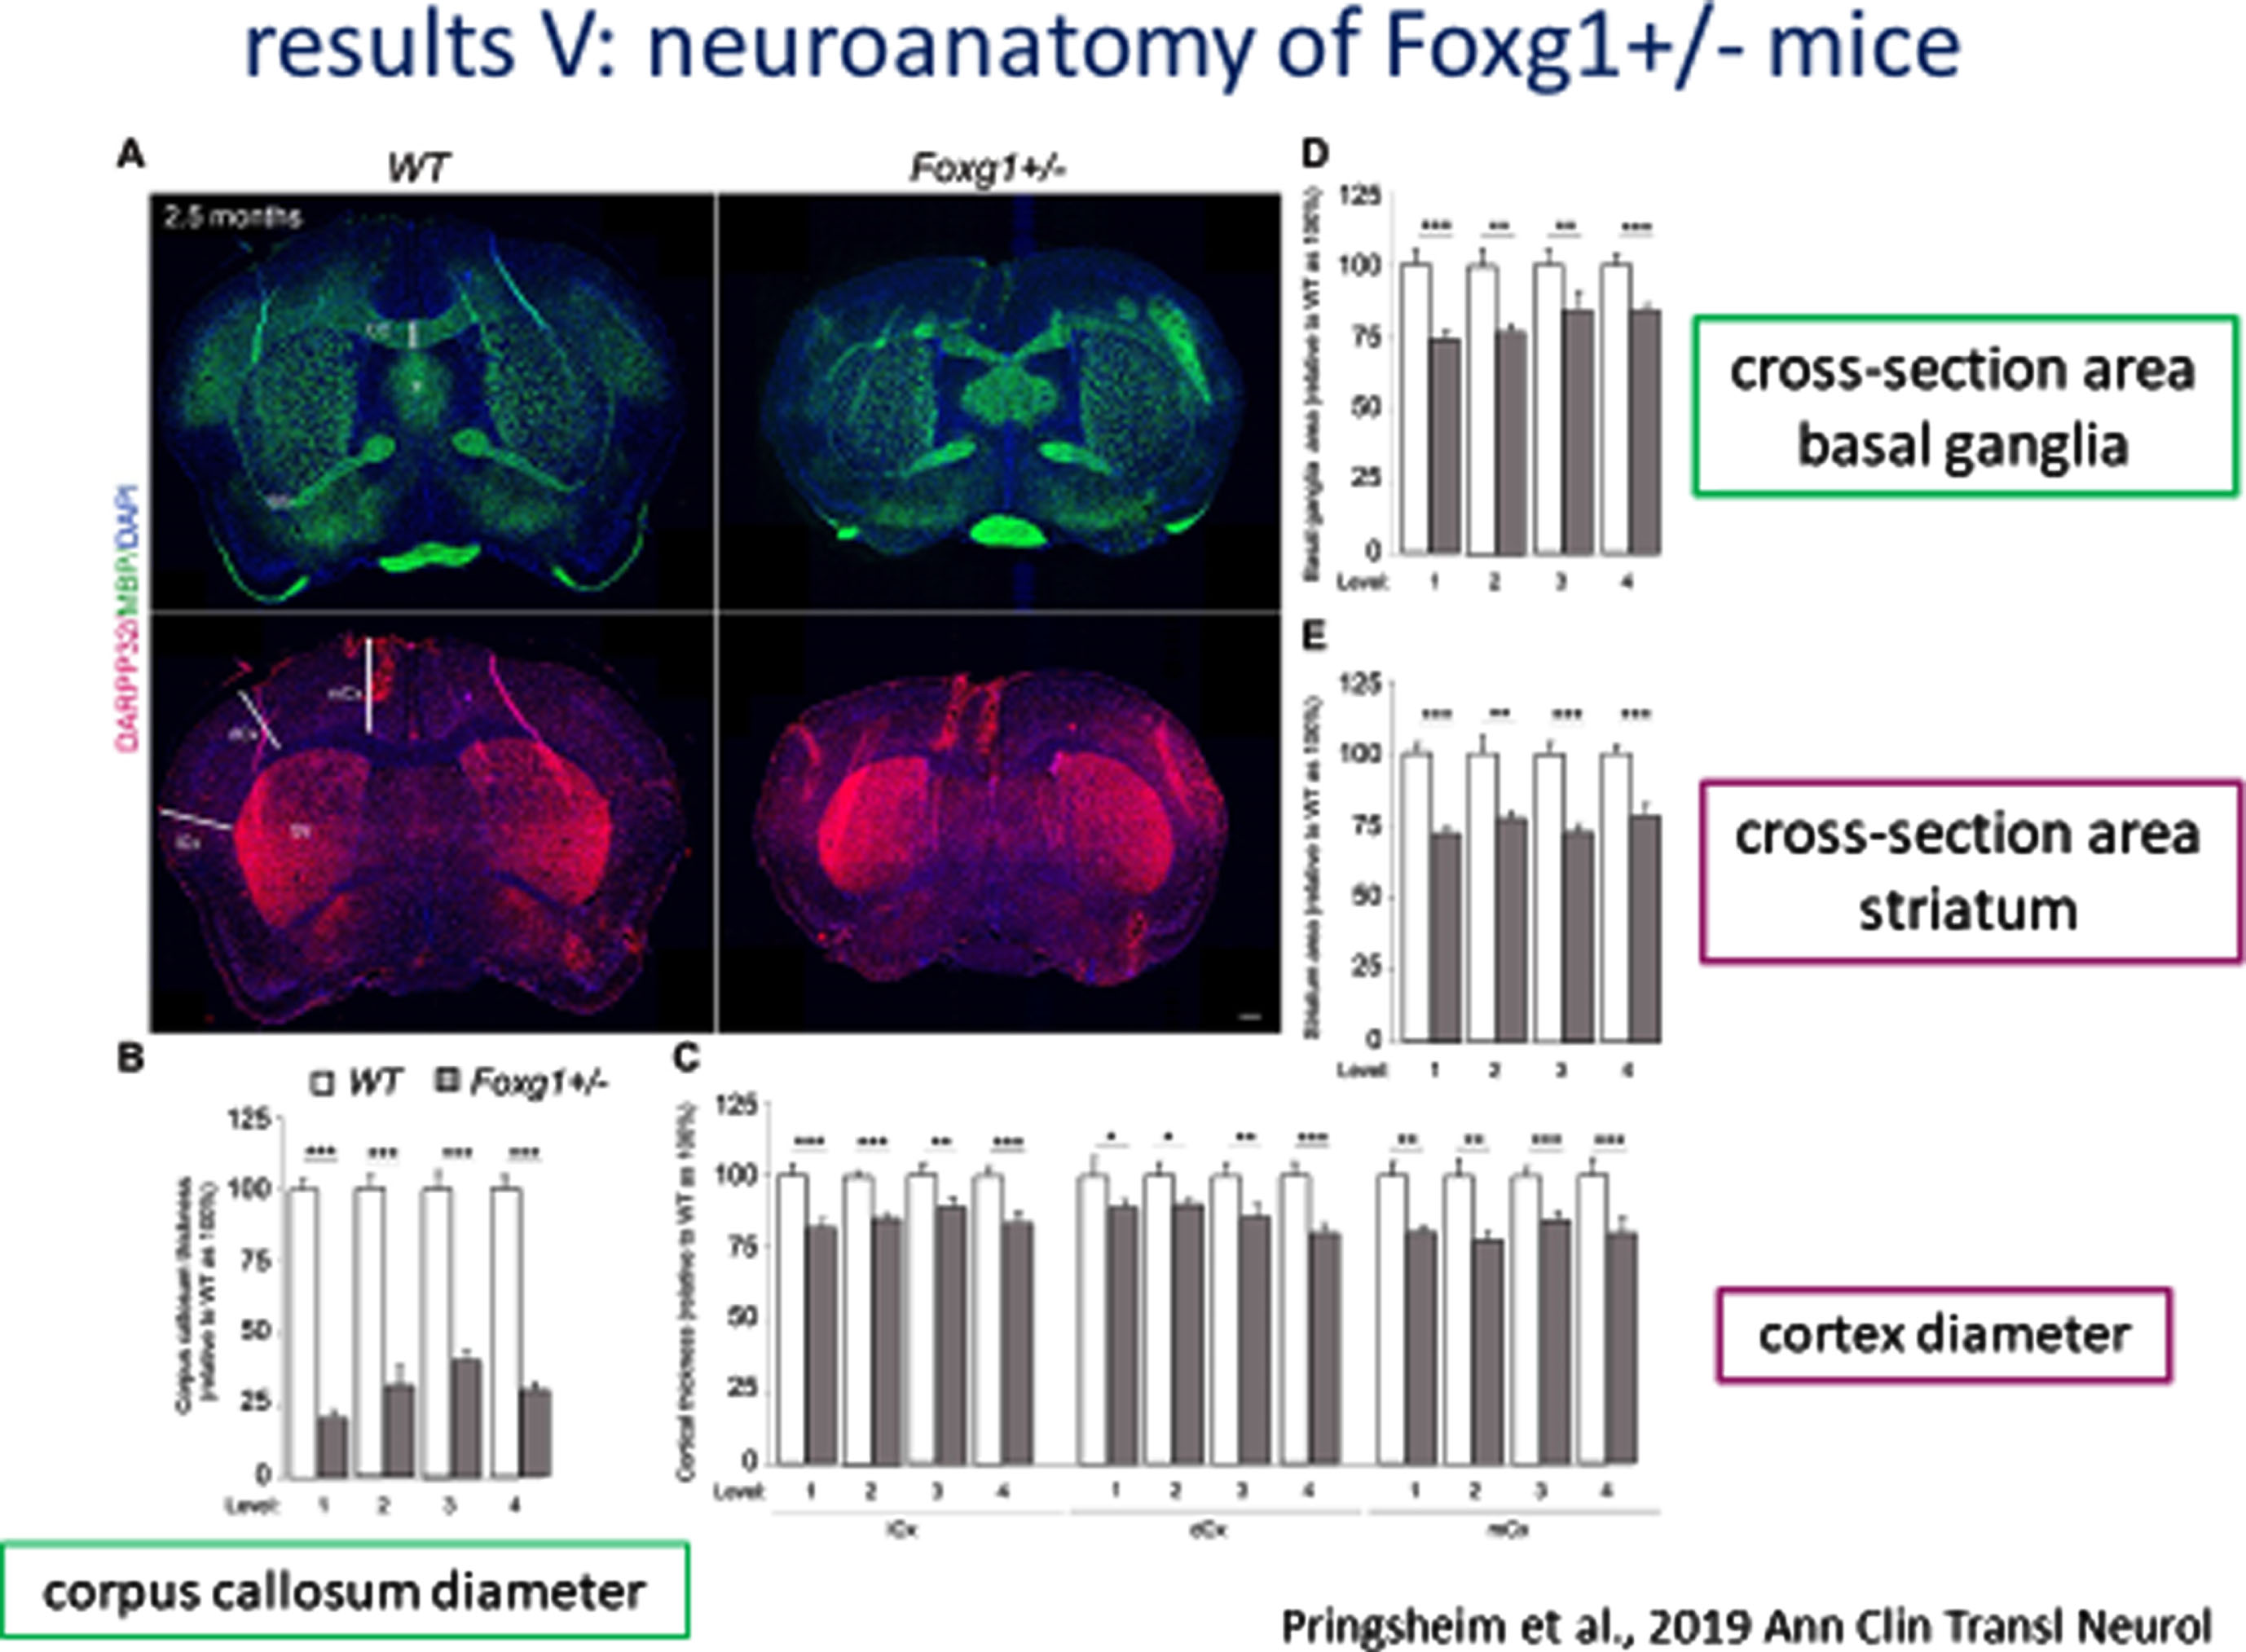 Neuroanatomy of FOXG1 Mouse Model: Cross-sectional area of Basal Ganglia and Striatum and Diameter of Cortex.